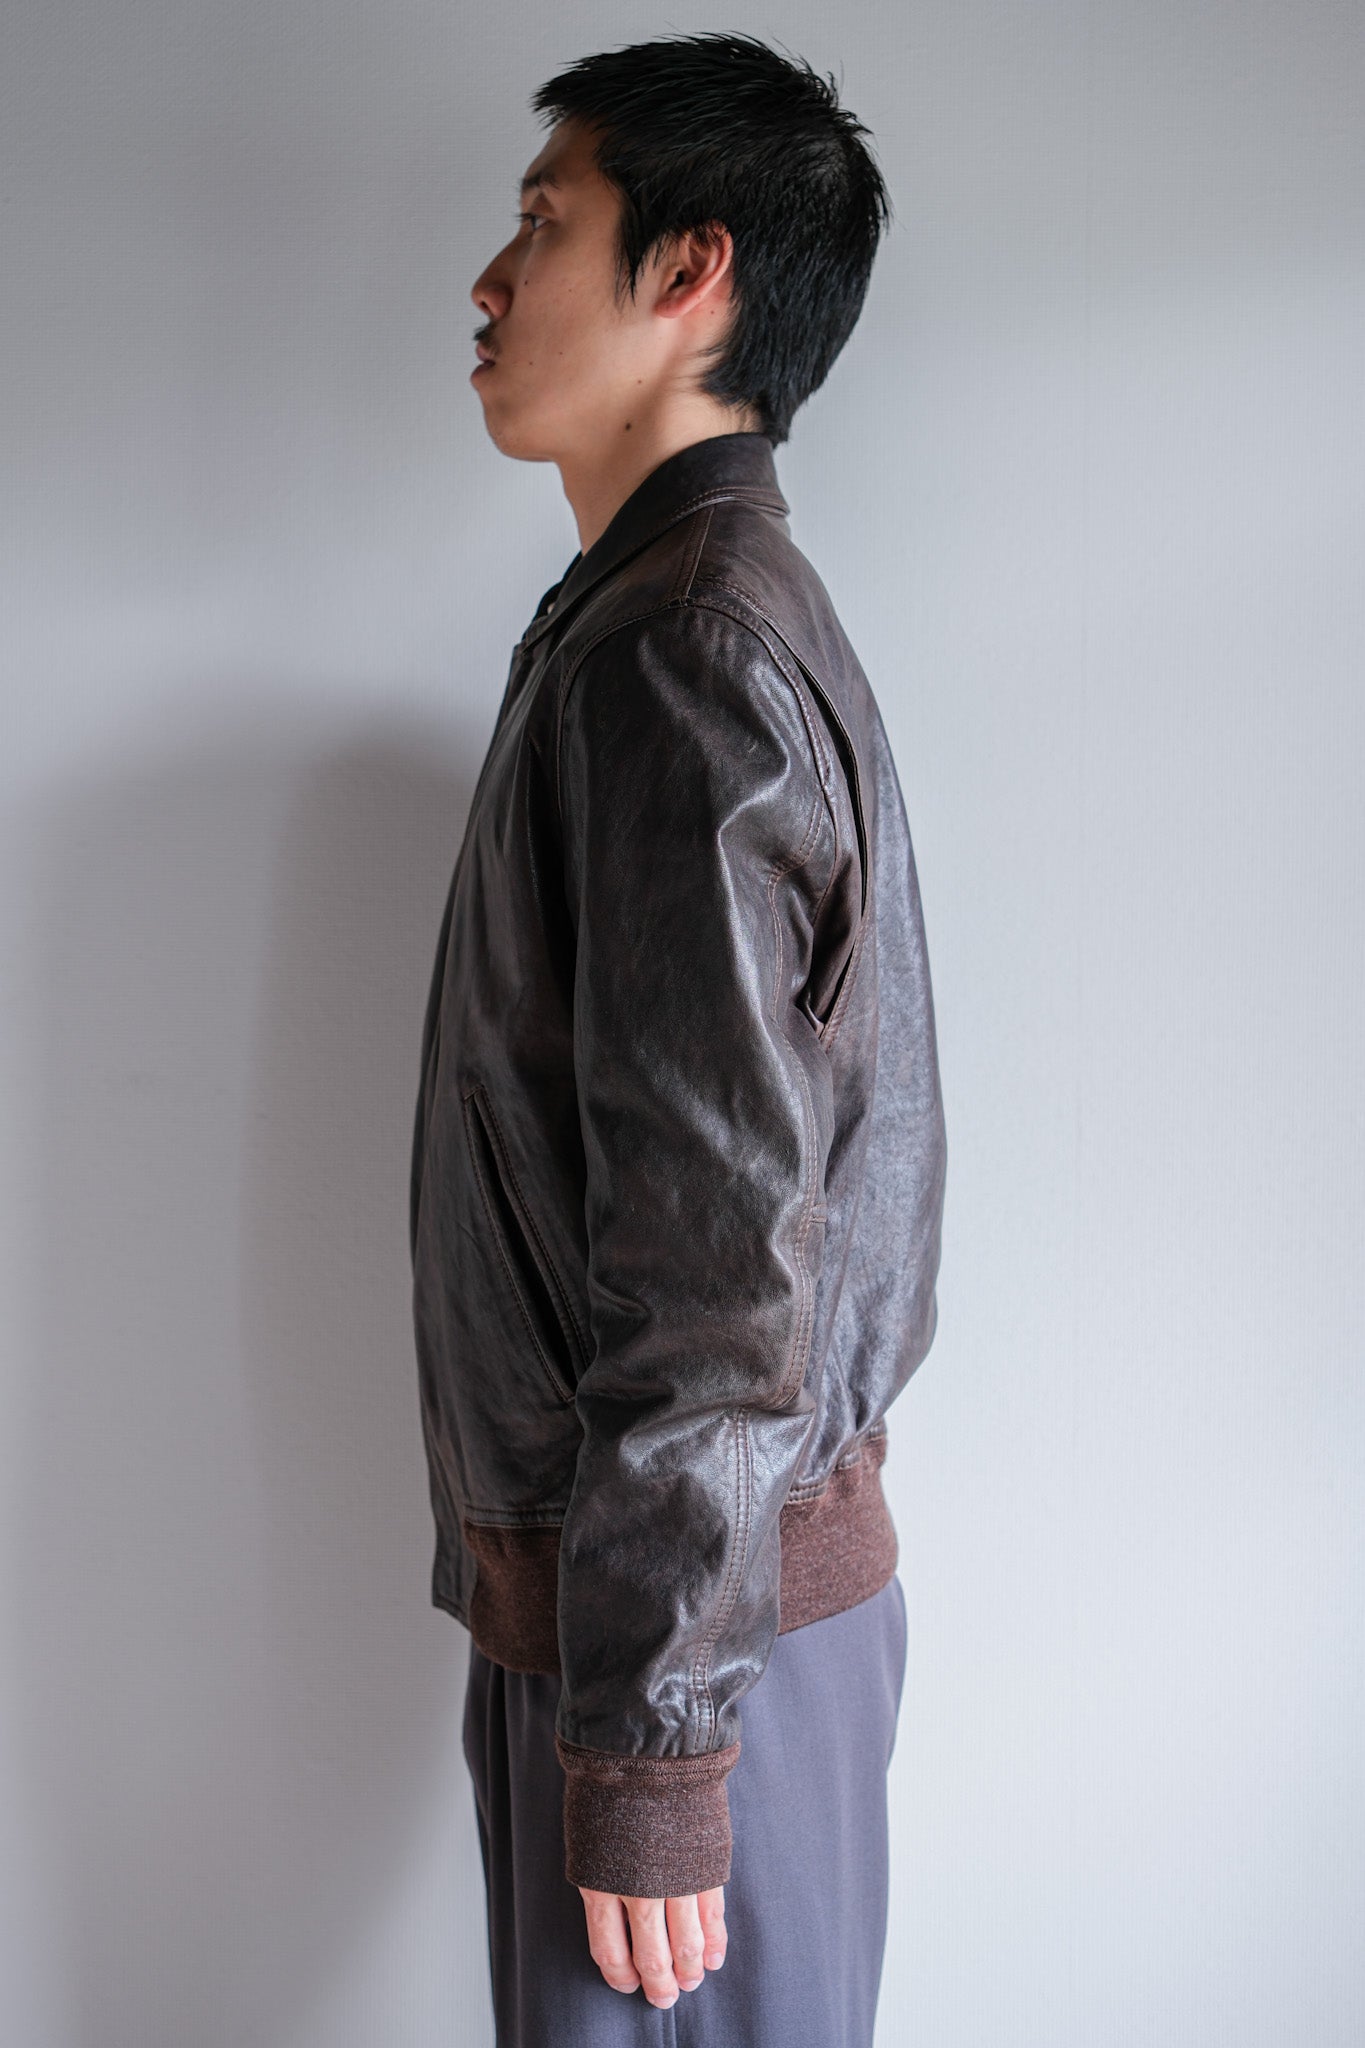 【~2010's】Old PRADA LINEA ROSSA Brown Leather Blouson Size.48 "PRADA SPORT"